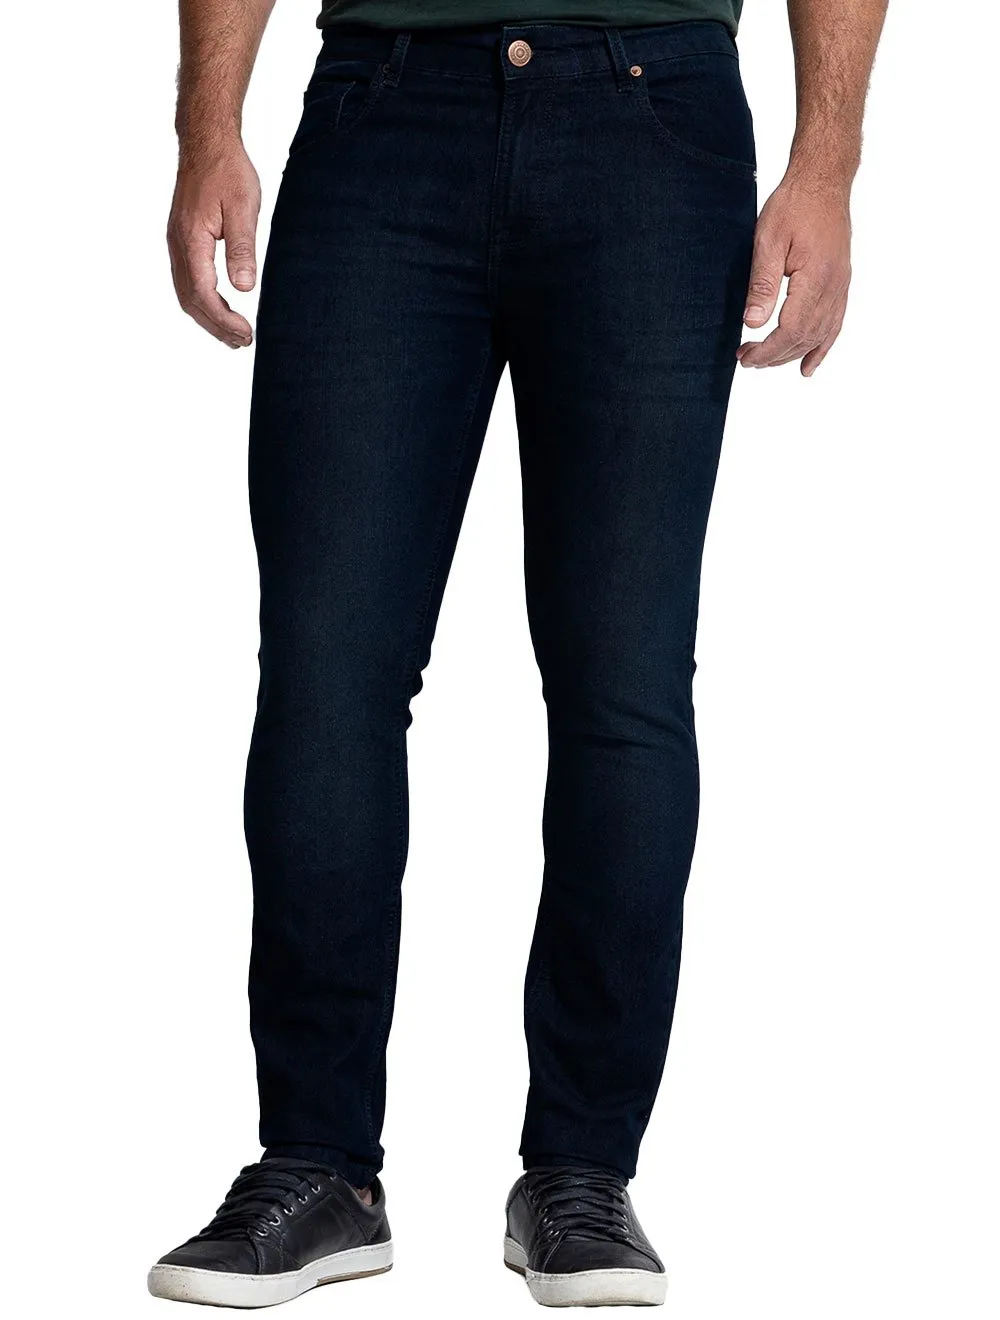 Coletar 33+ imagem calça jeans masculina guess - br.thptnganamst.edu.vn